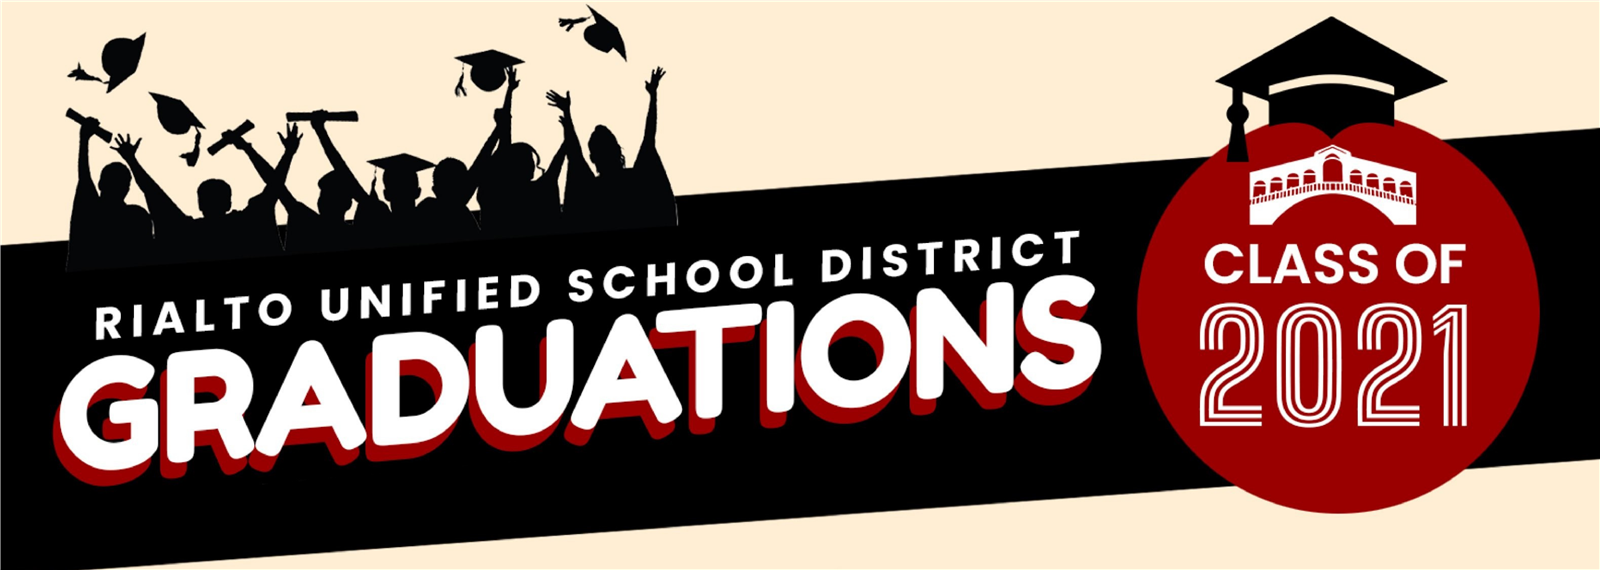 Rialto Unified School District Graduations Class of 2021